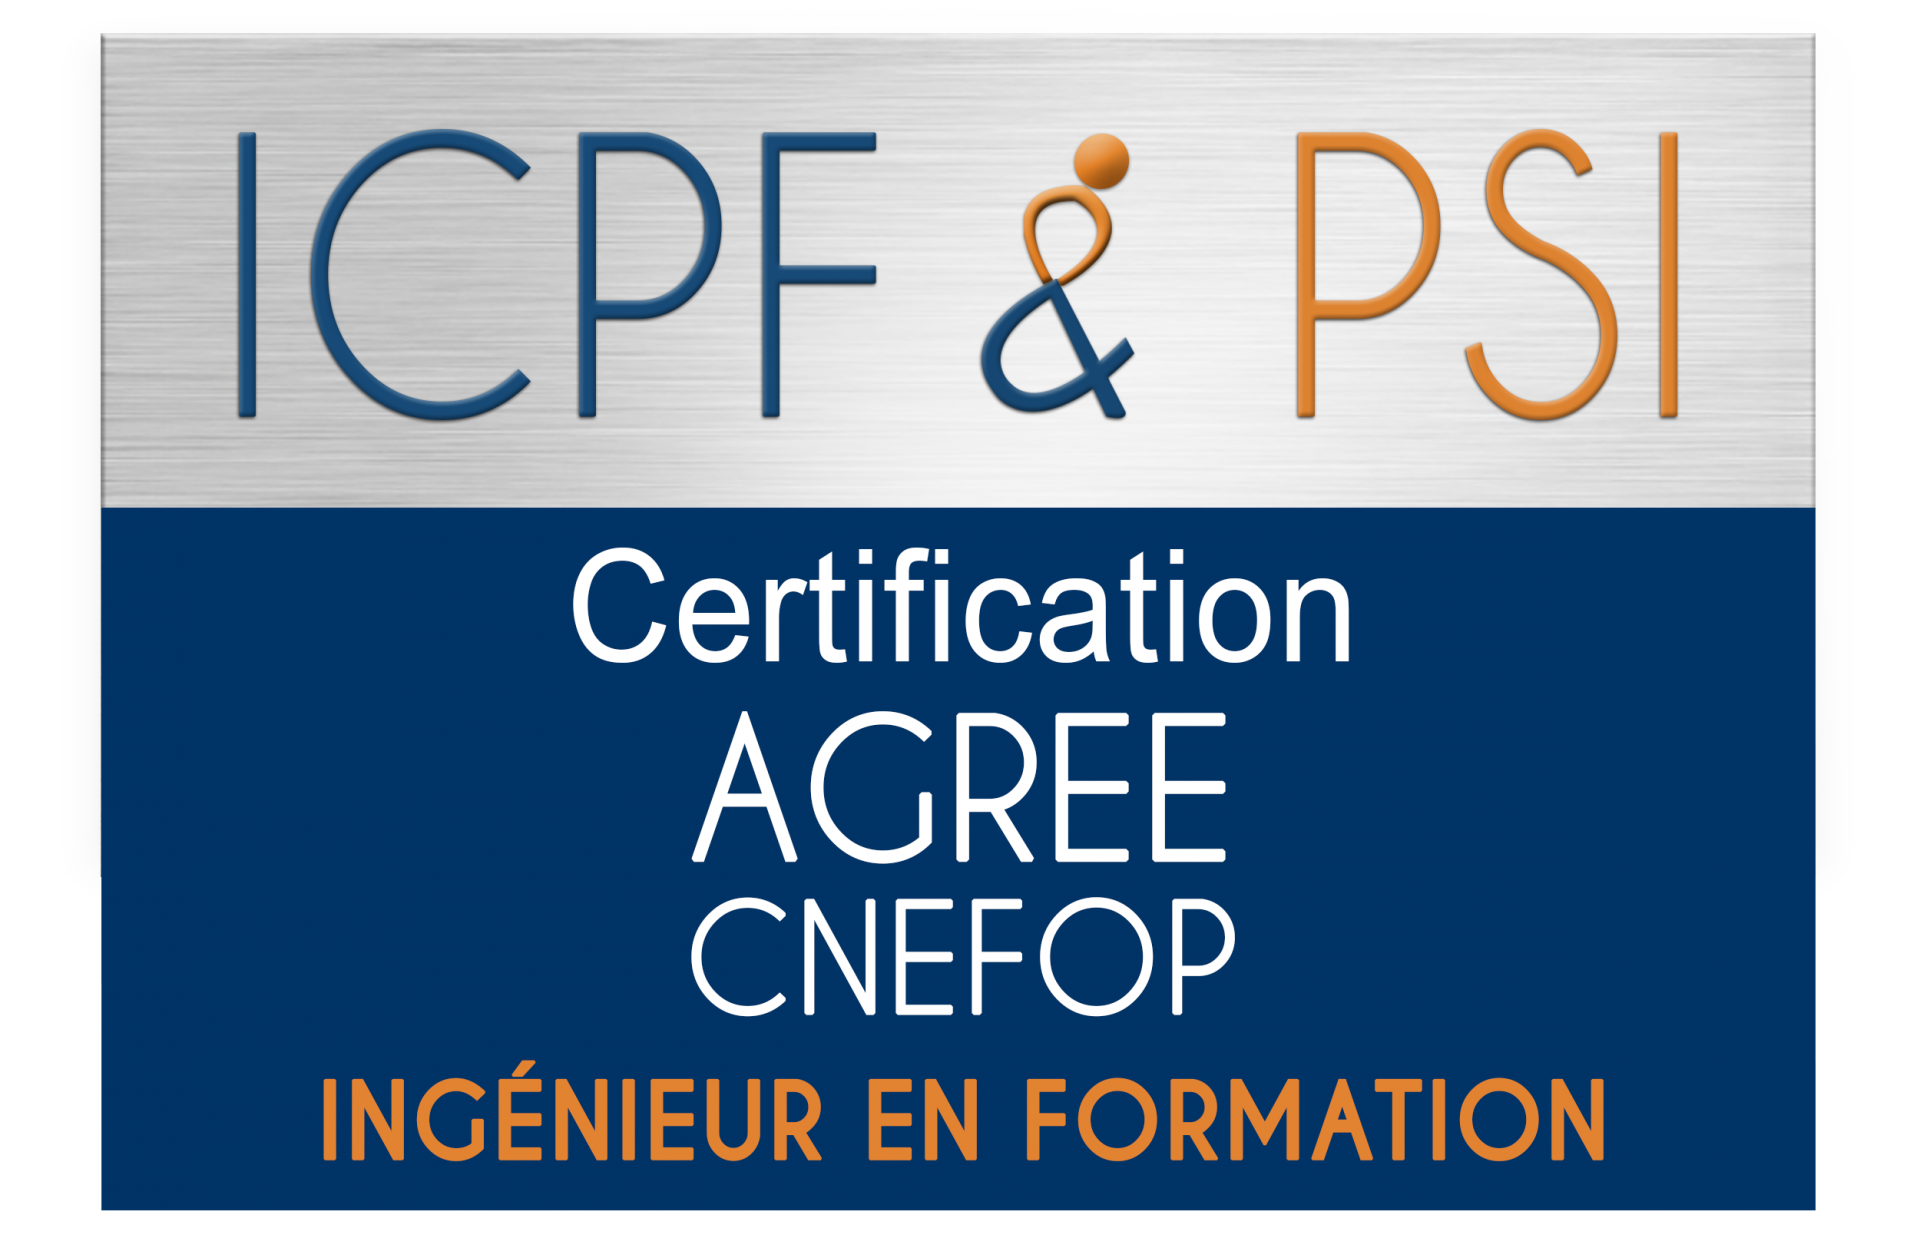 Logo icpf psi agree cnefop ingenieur en formation christel ceccotto